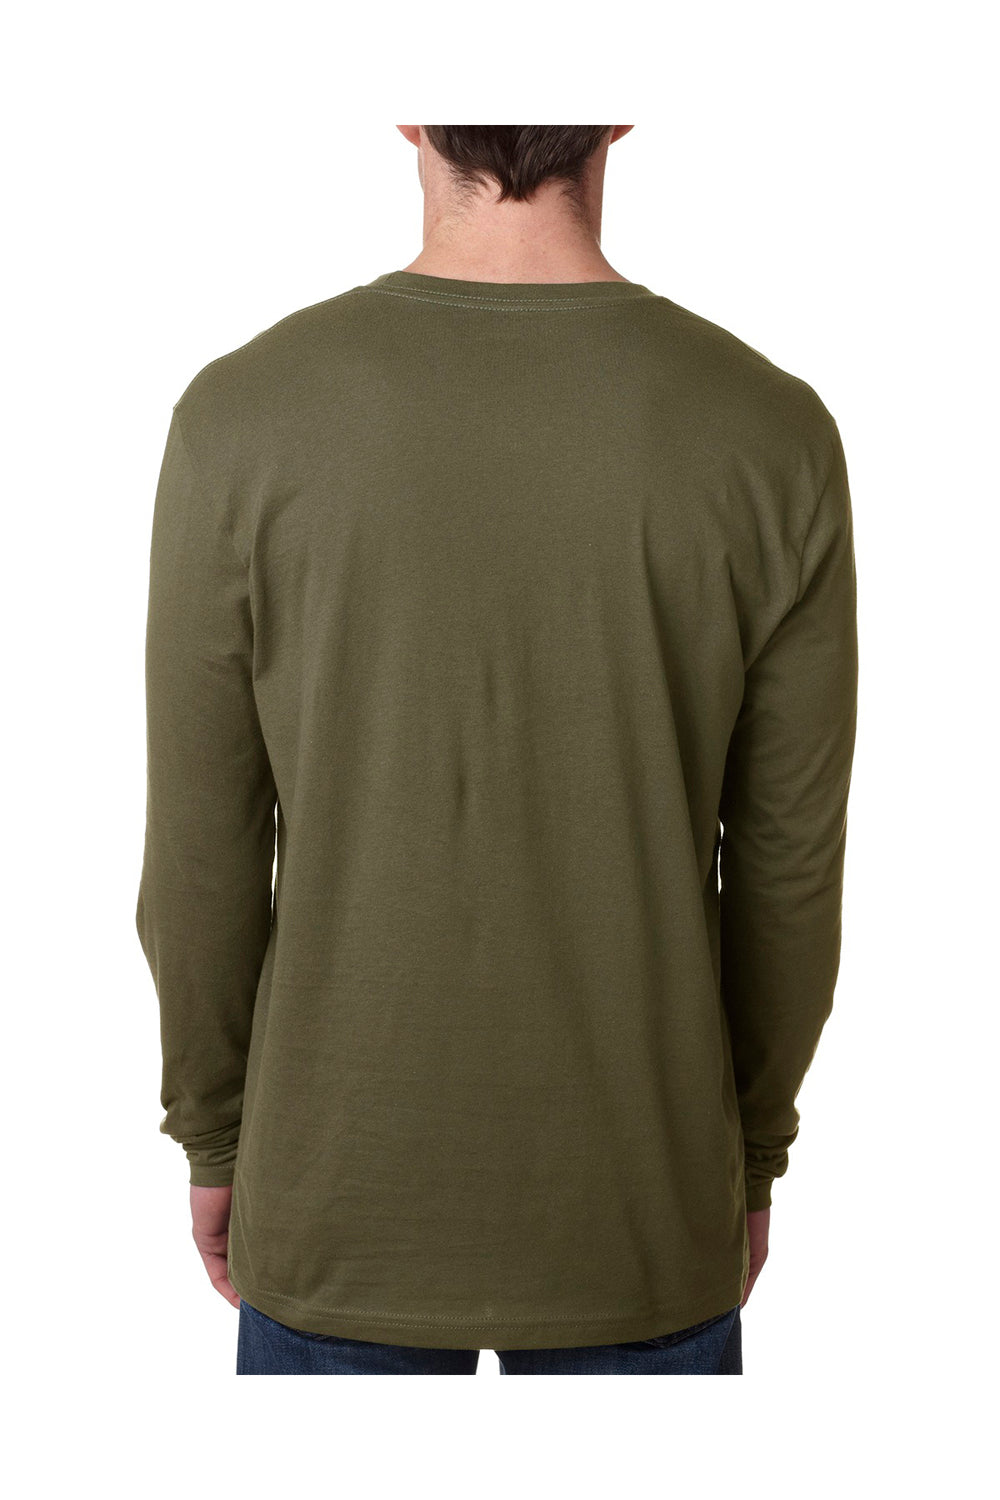 Next Level N3601 Mens Fine Jersey Long Sleeve Crewneck T-Shirt Military Green Back